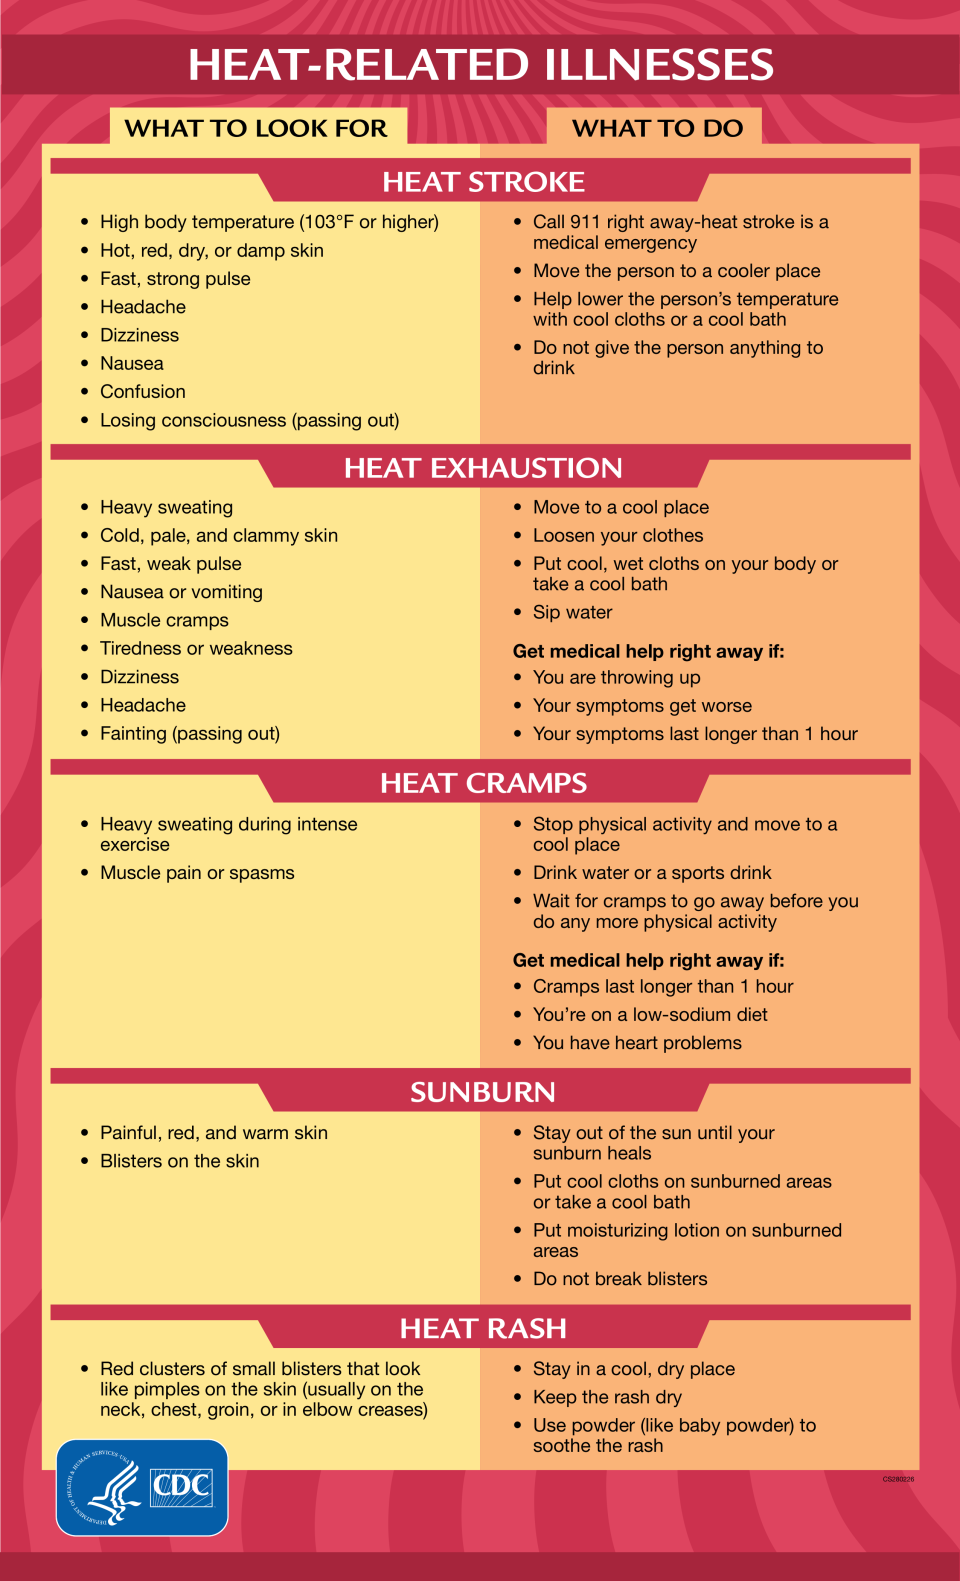 Symptoms of heat-related illnesses.